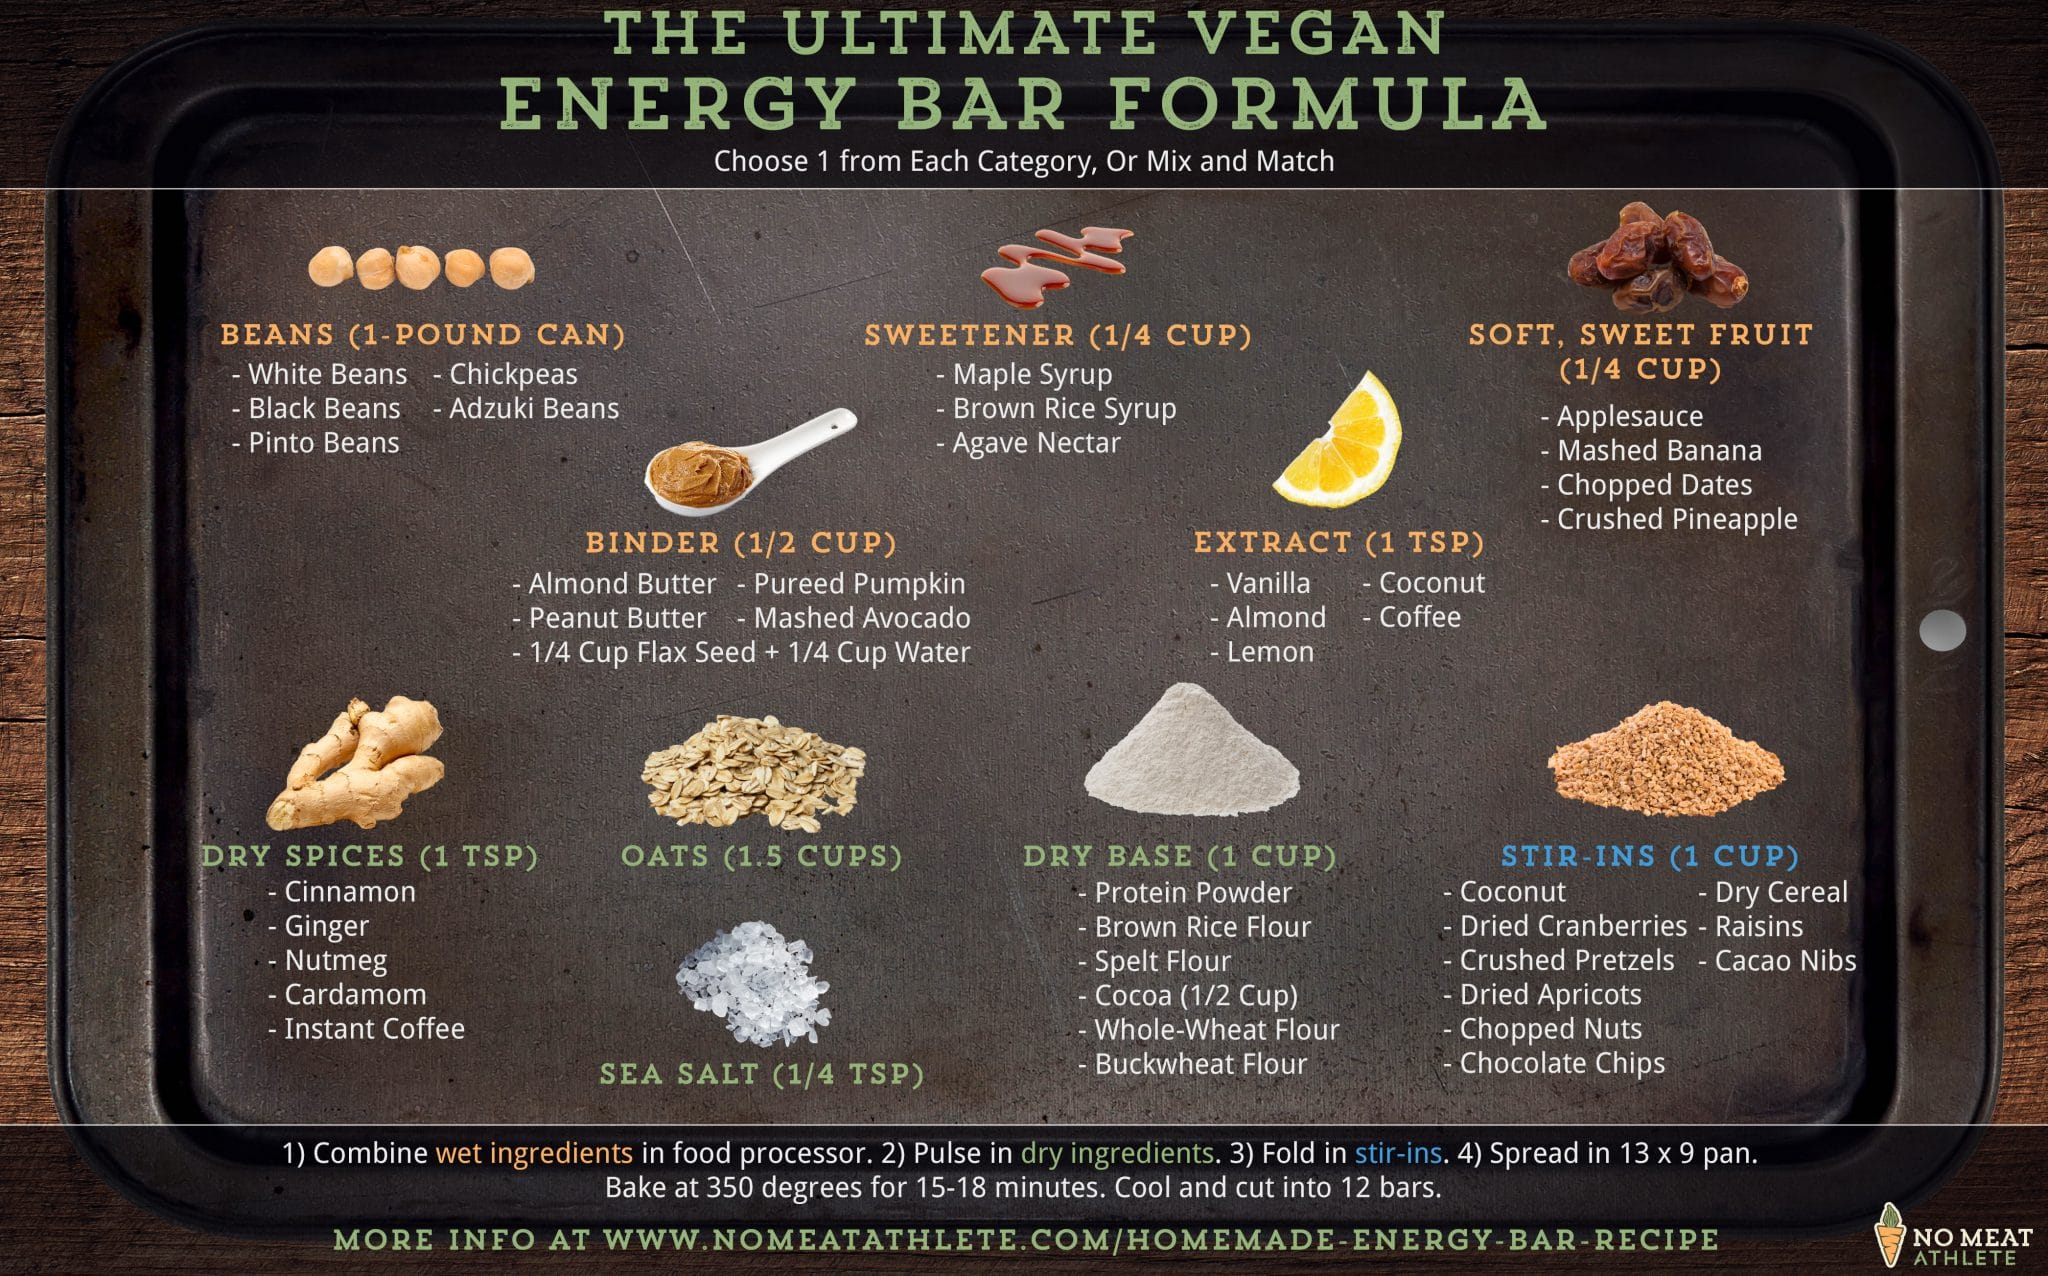 https://www.nomeatathlete.com/wp-content/uploads/2011/08/energy-bar-recipe-infographic.jpg